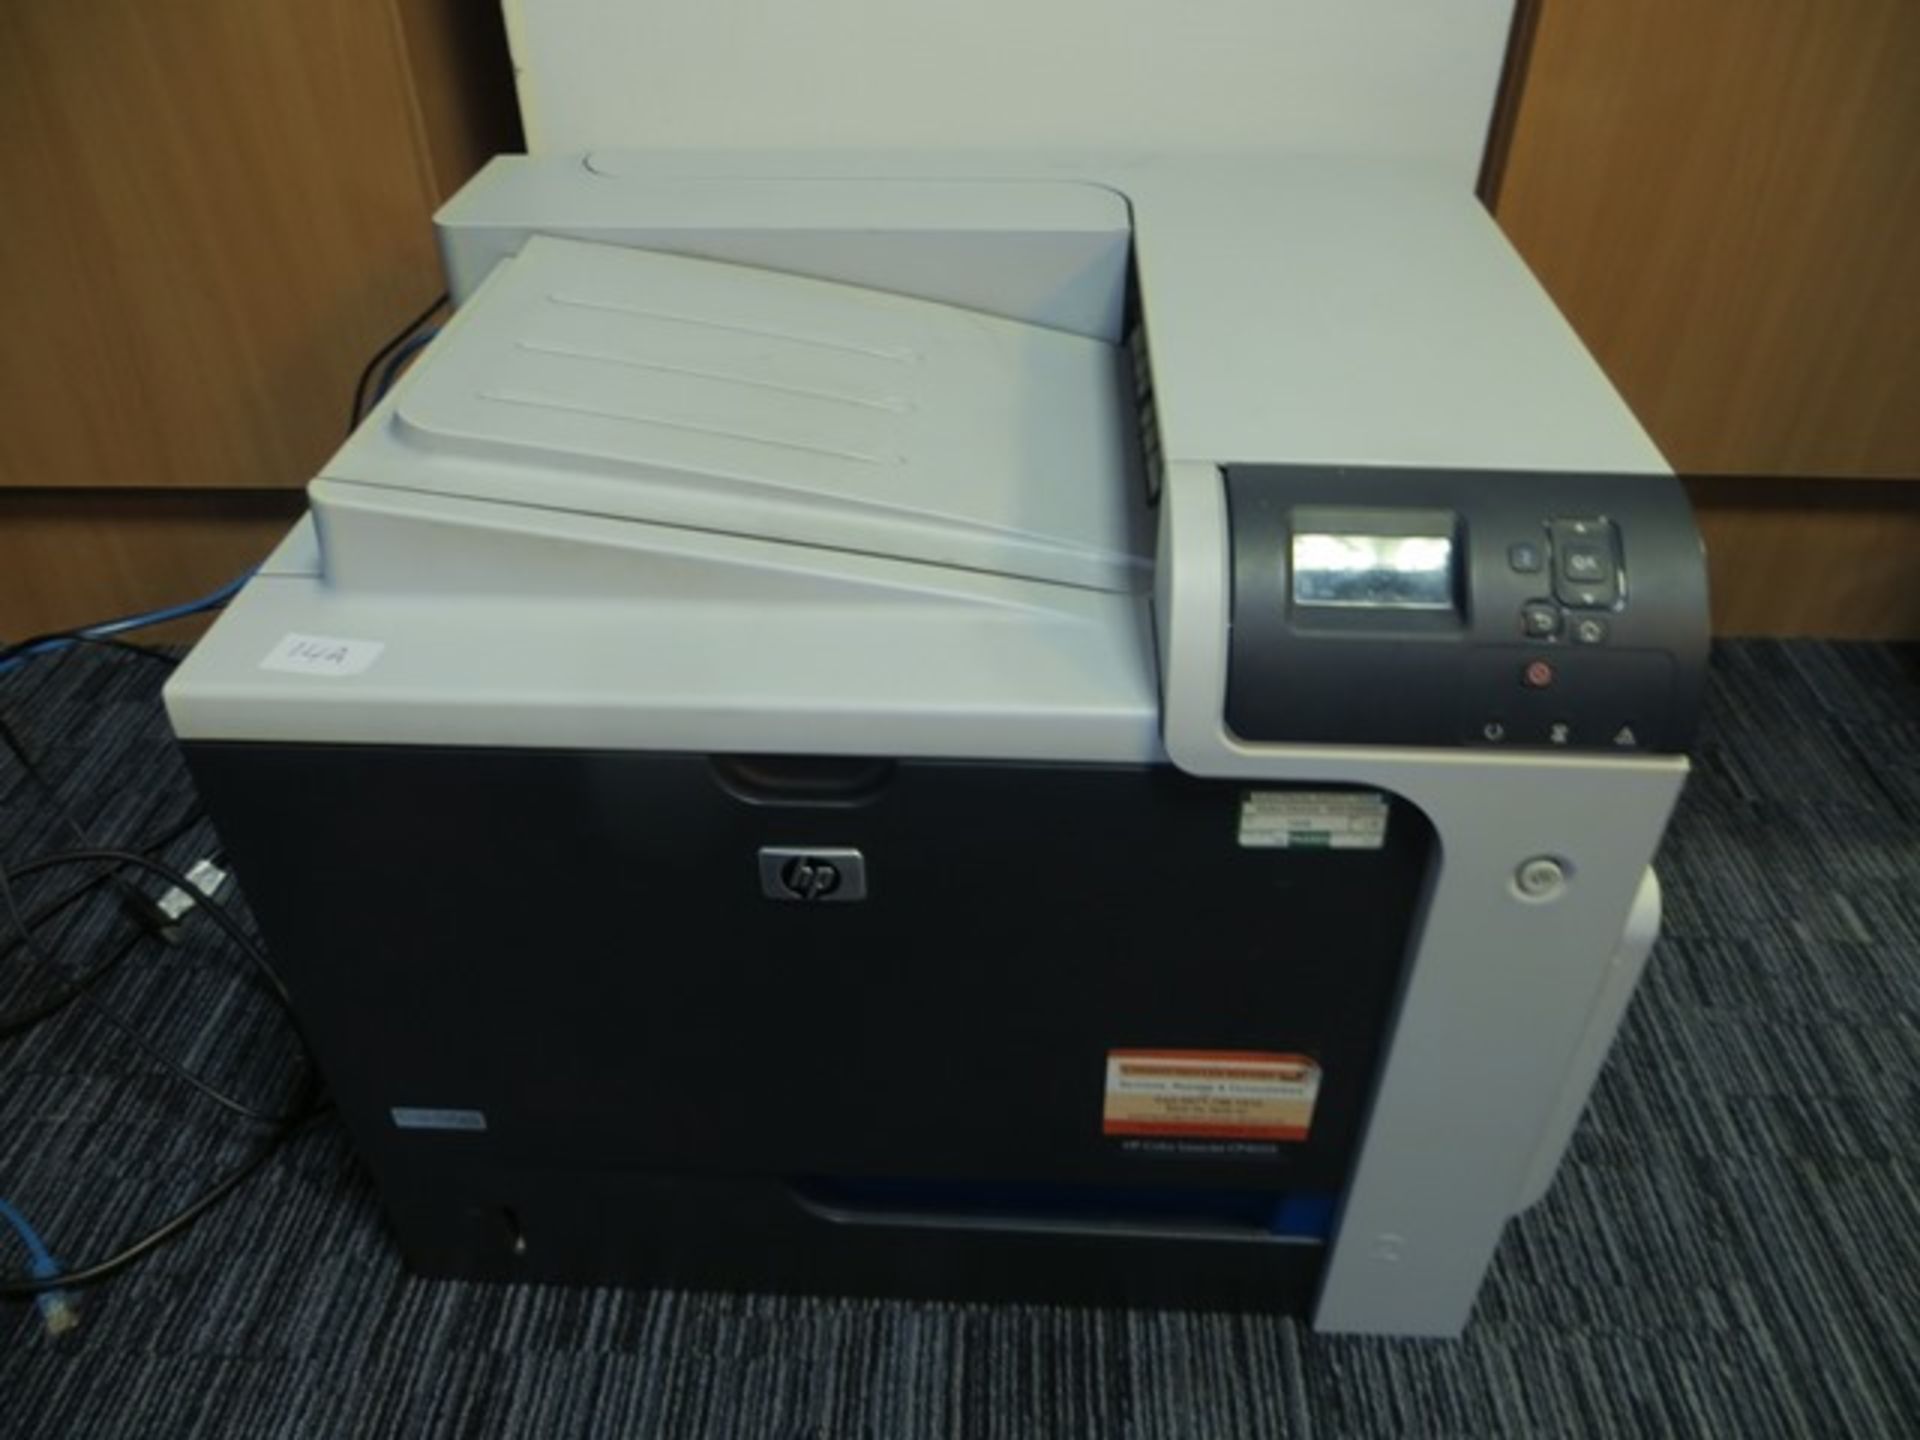 Hewlett Packard Colour Laserjet printer model CP4025